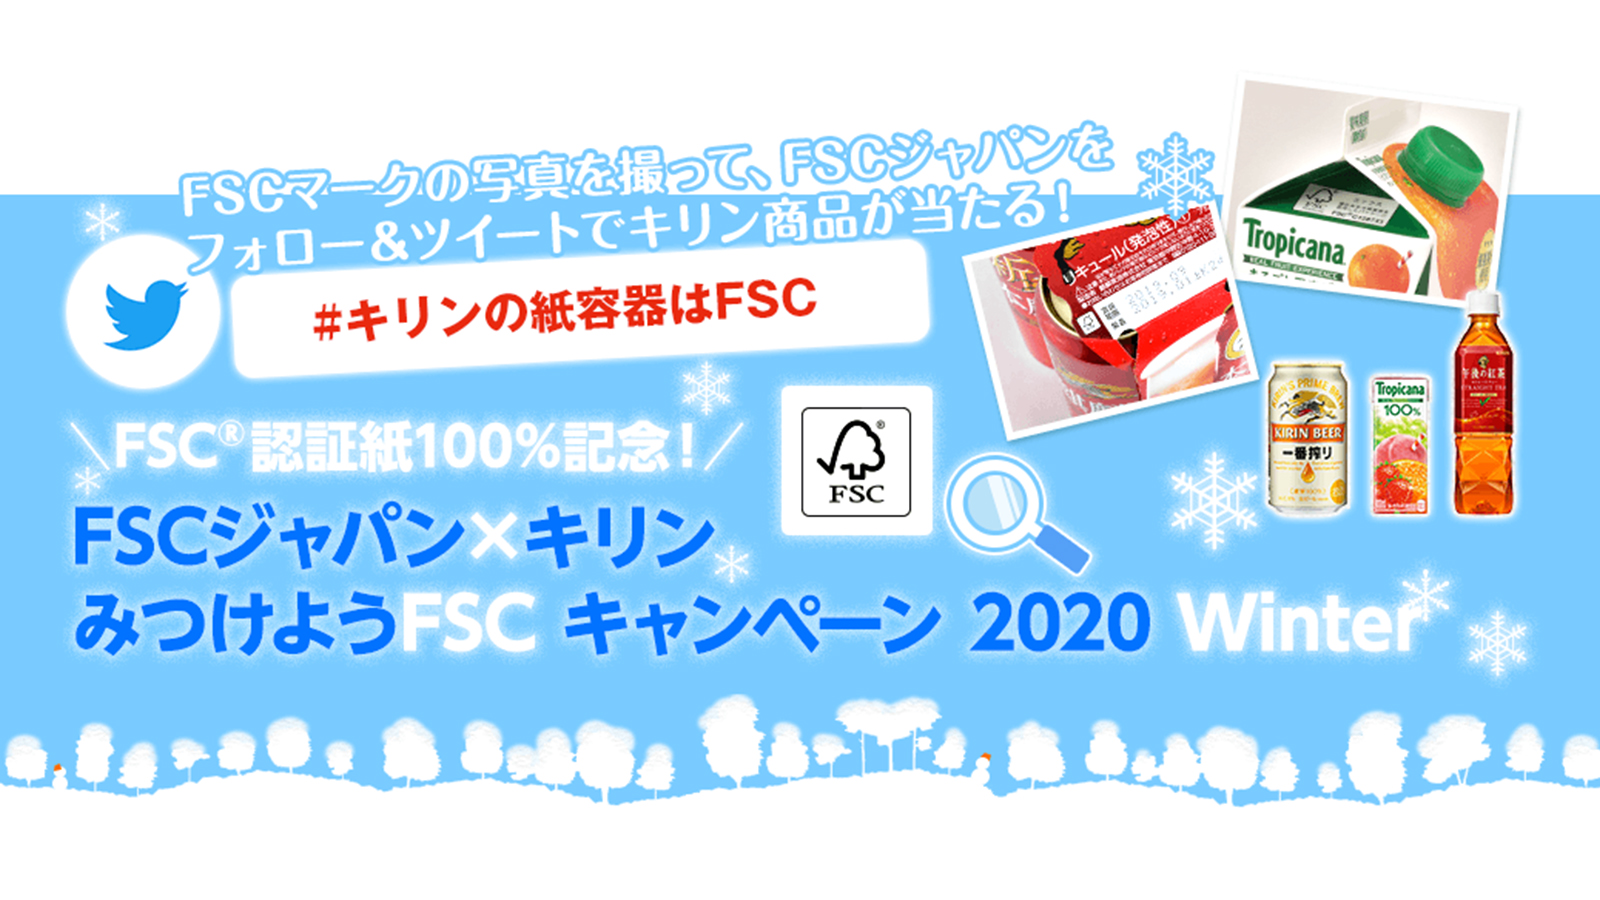 Fsc ジャパン キリン みつけようfscキャンペーン Winter Fscジャパンのプレスリリース